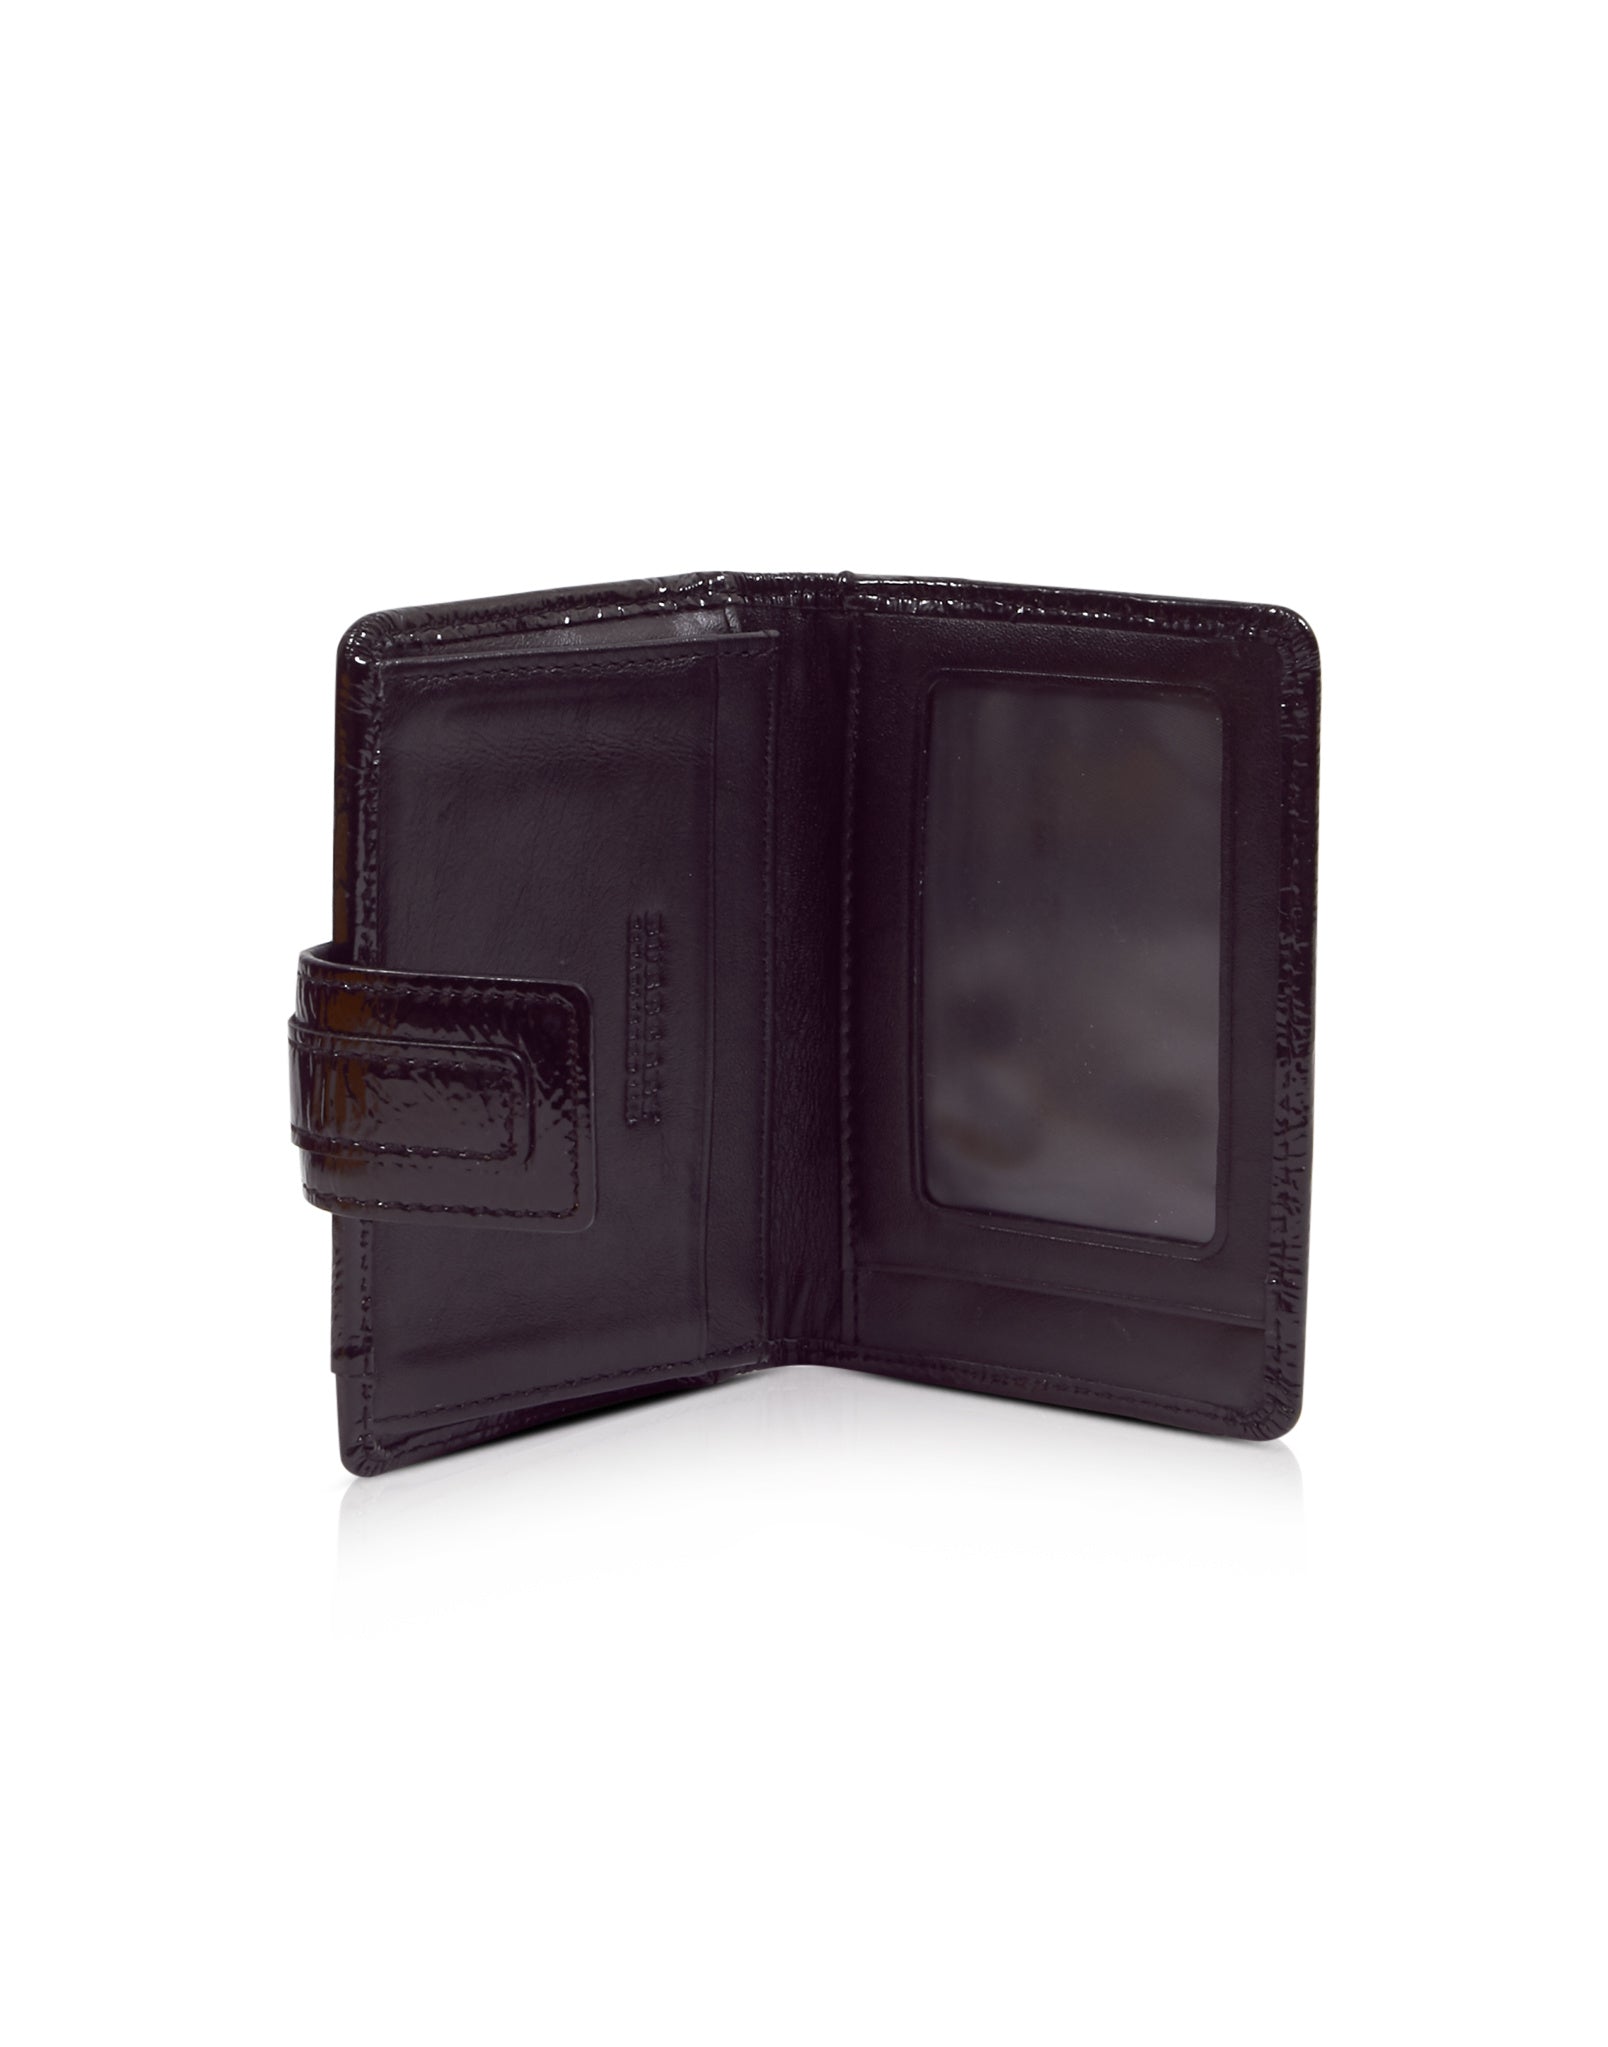 Burberry Black Patent Nova Check Card Holder/Wallet